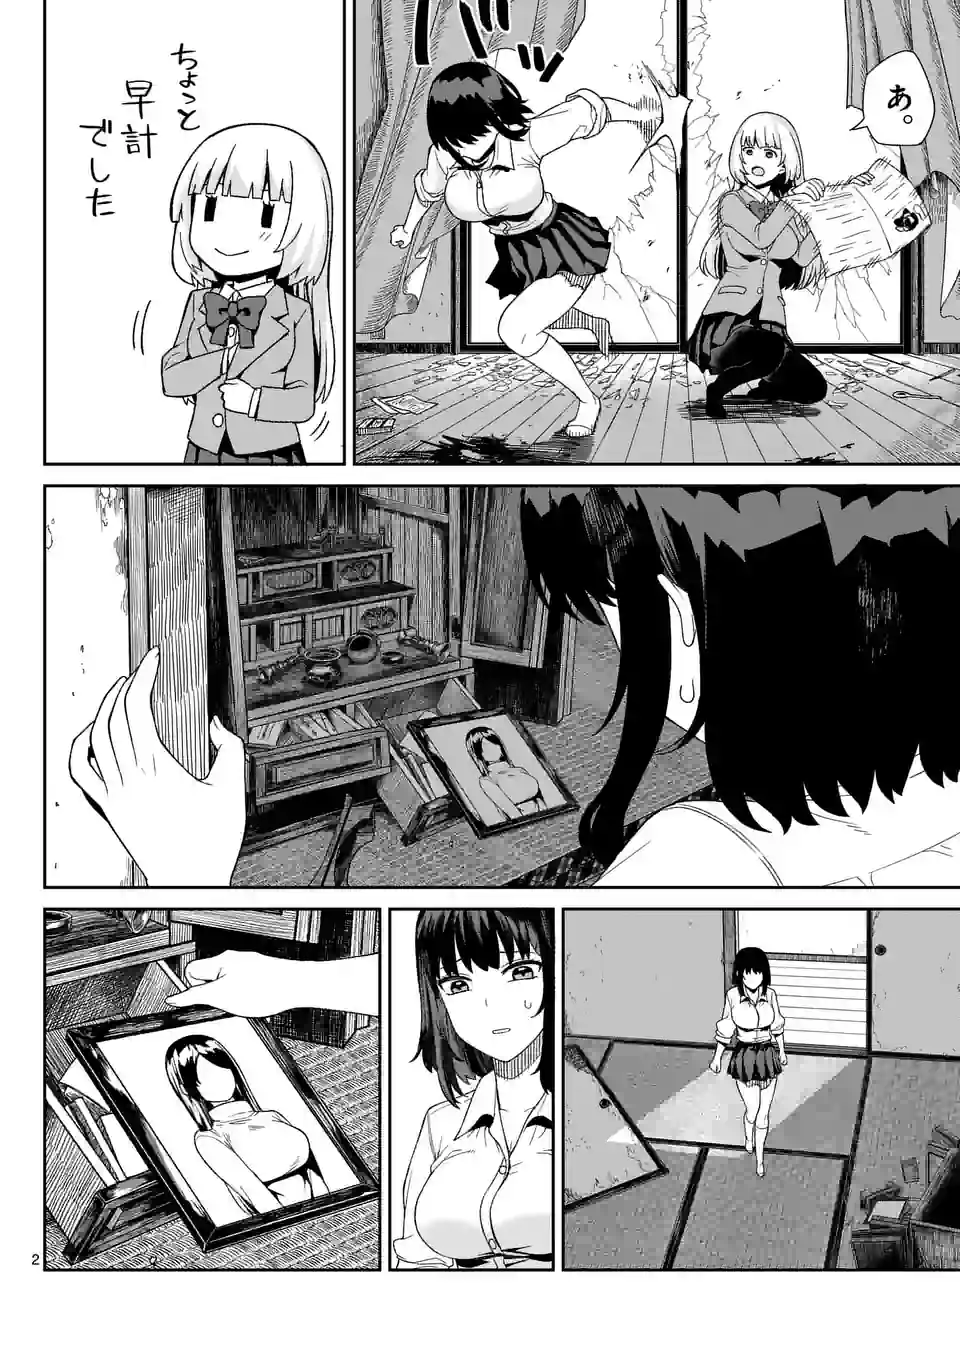 Bakemono Goroshi no Psycholily - Chapter 2 - Page 2